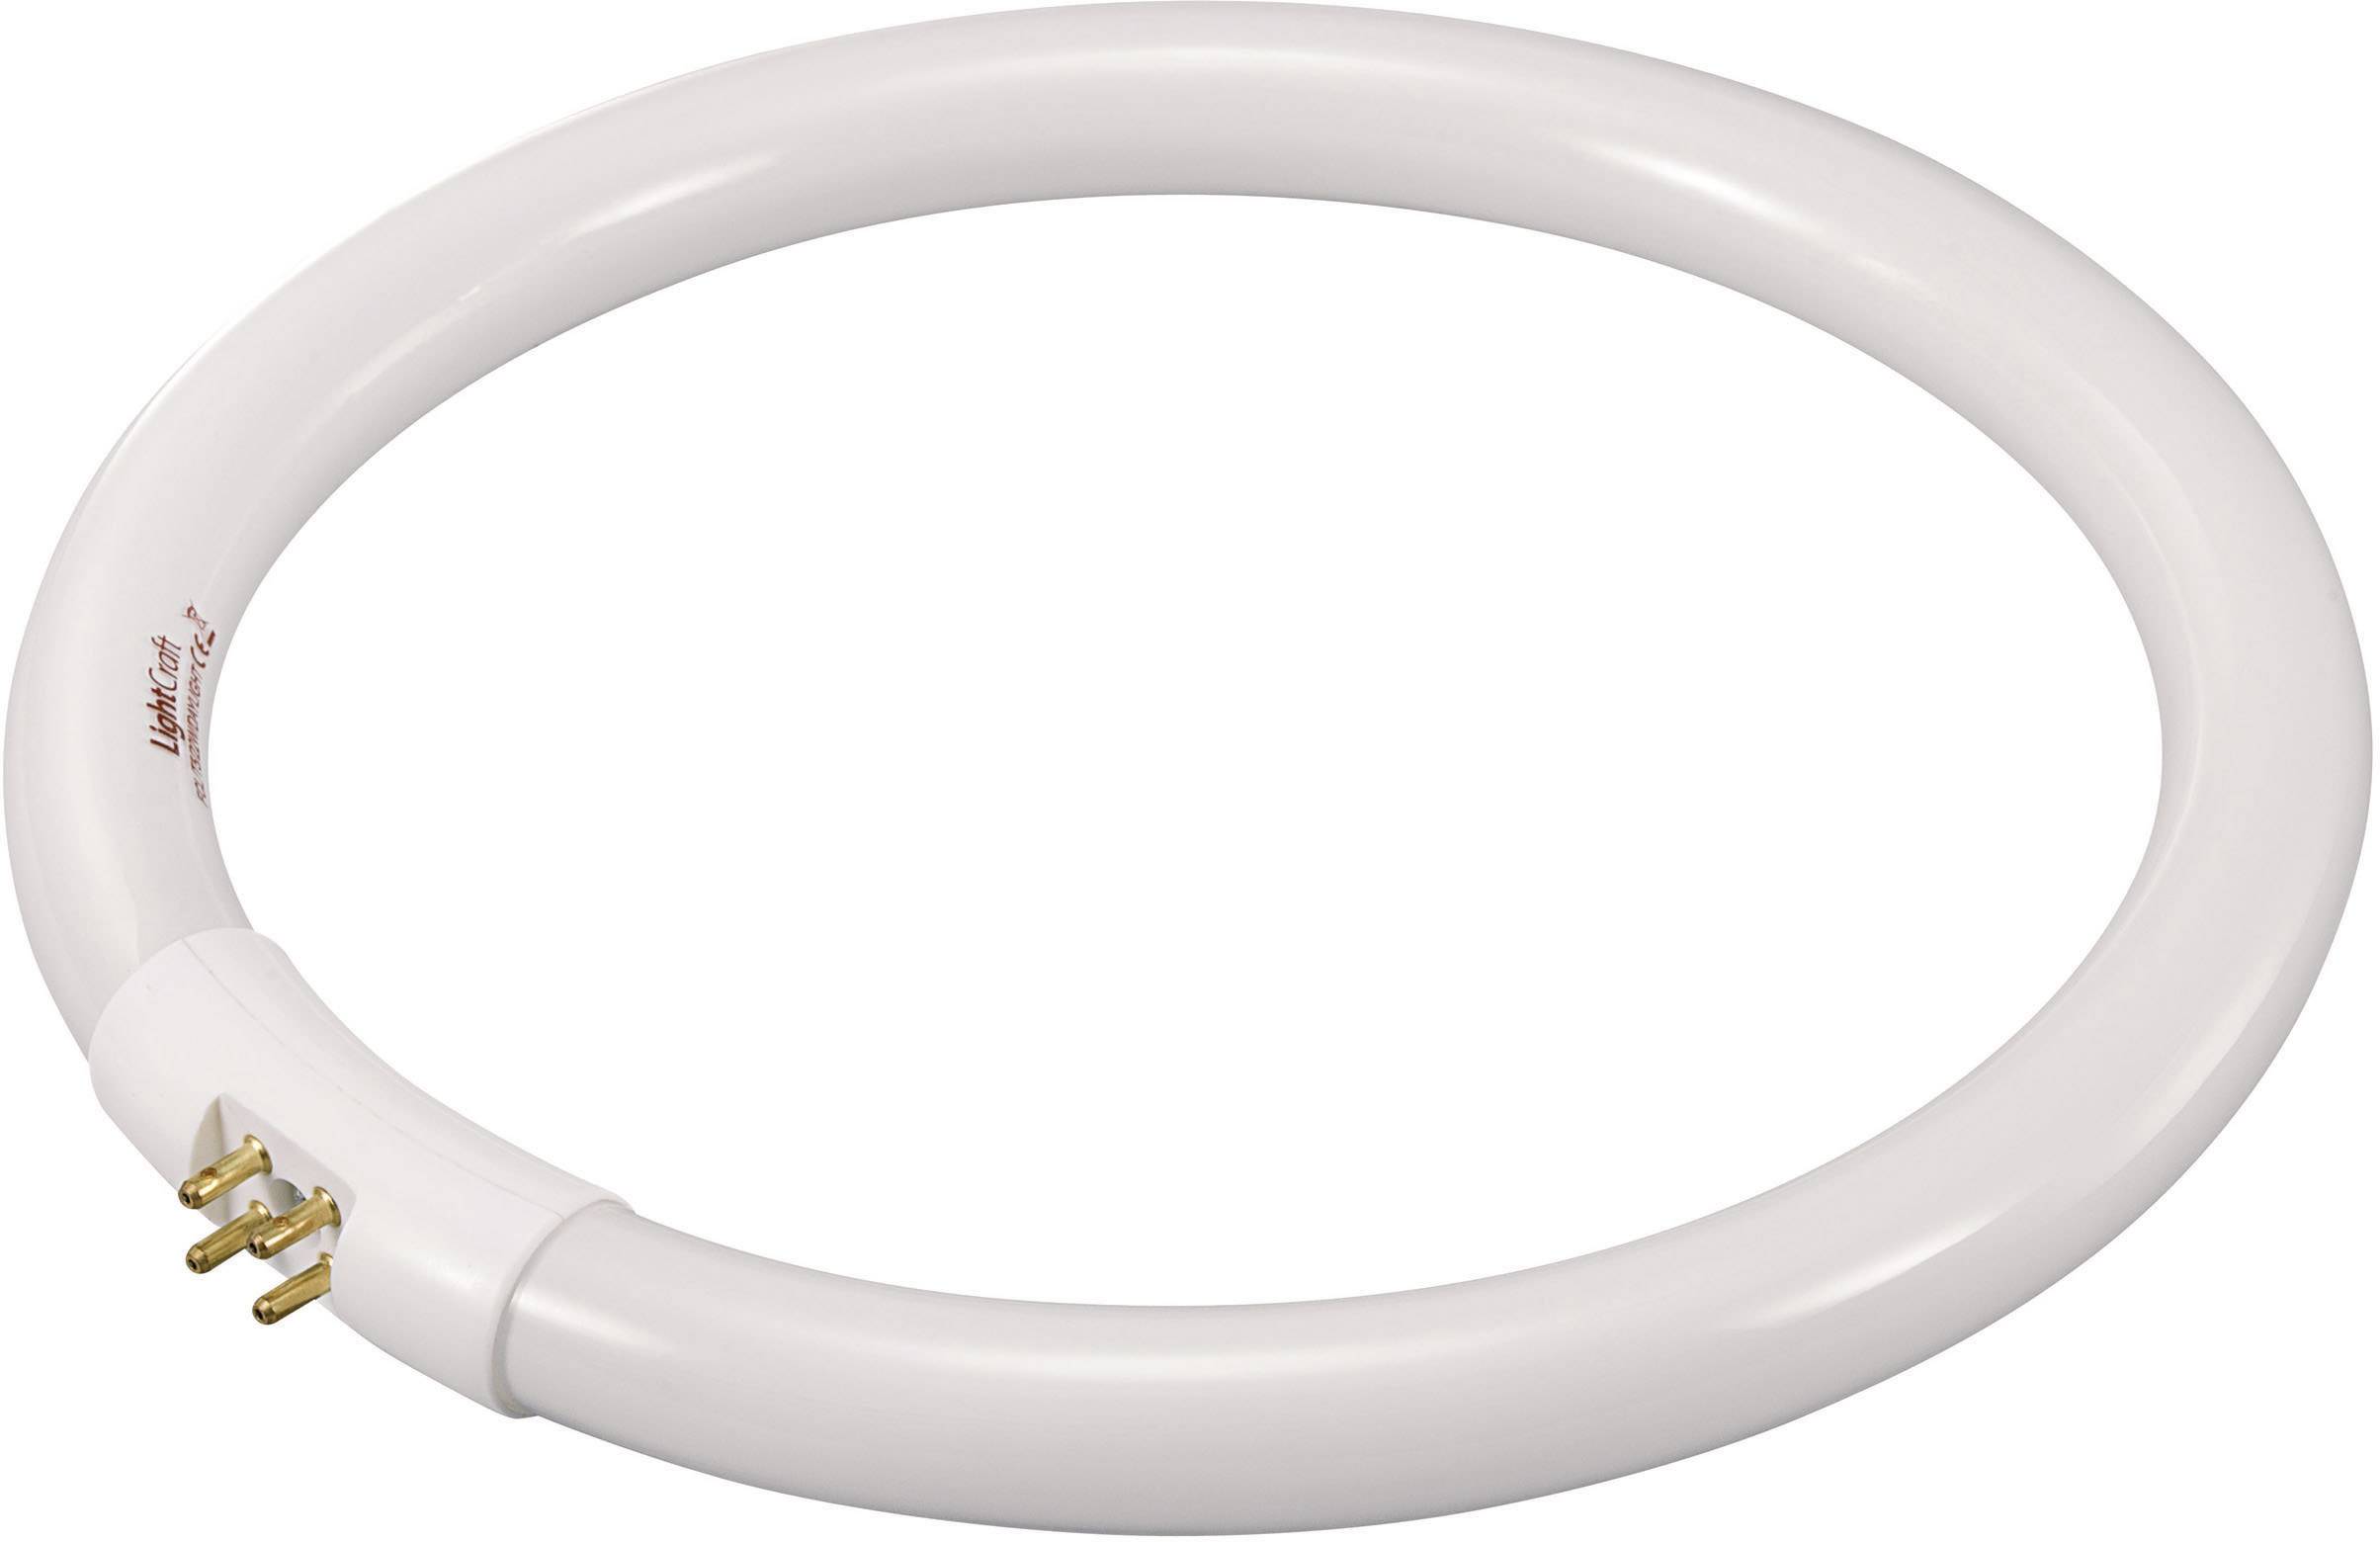 Tube fluorescent Heitronic G5 30 W blanc froid forme de tube 1 pc s 